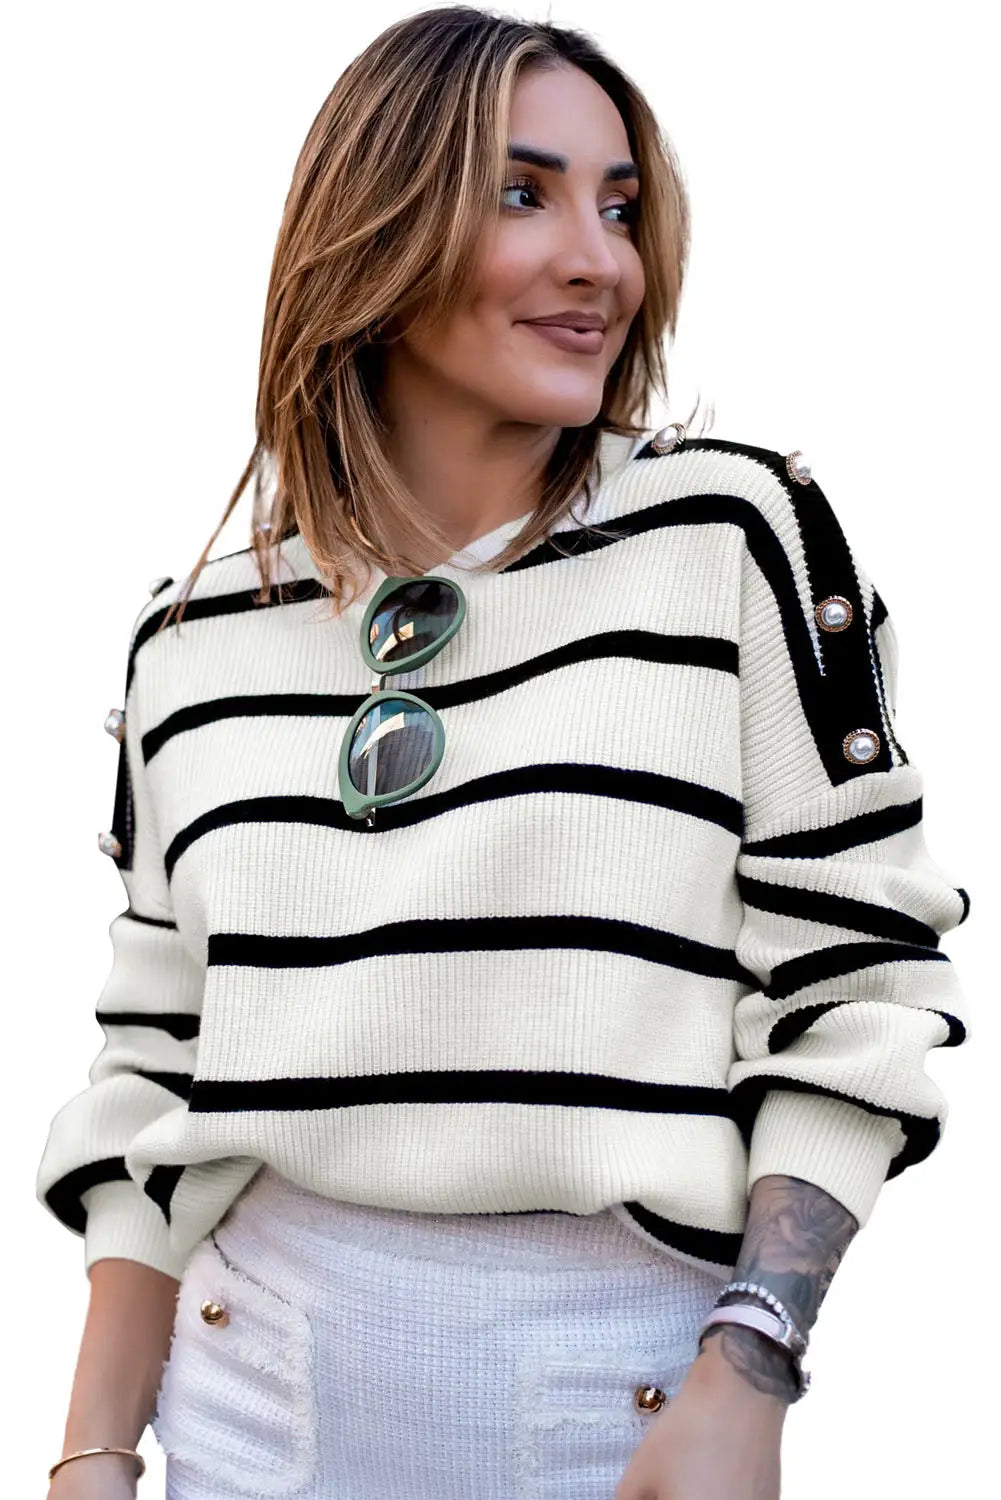 Stripe buttoned decor sweater - sweaters & cardigans